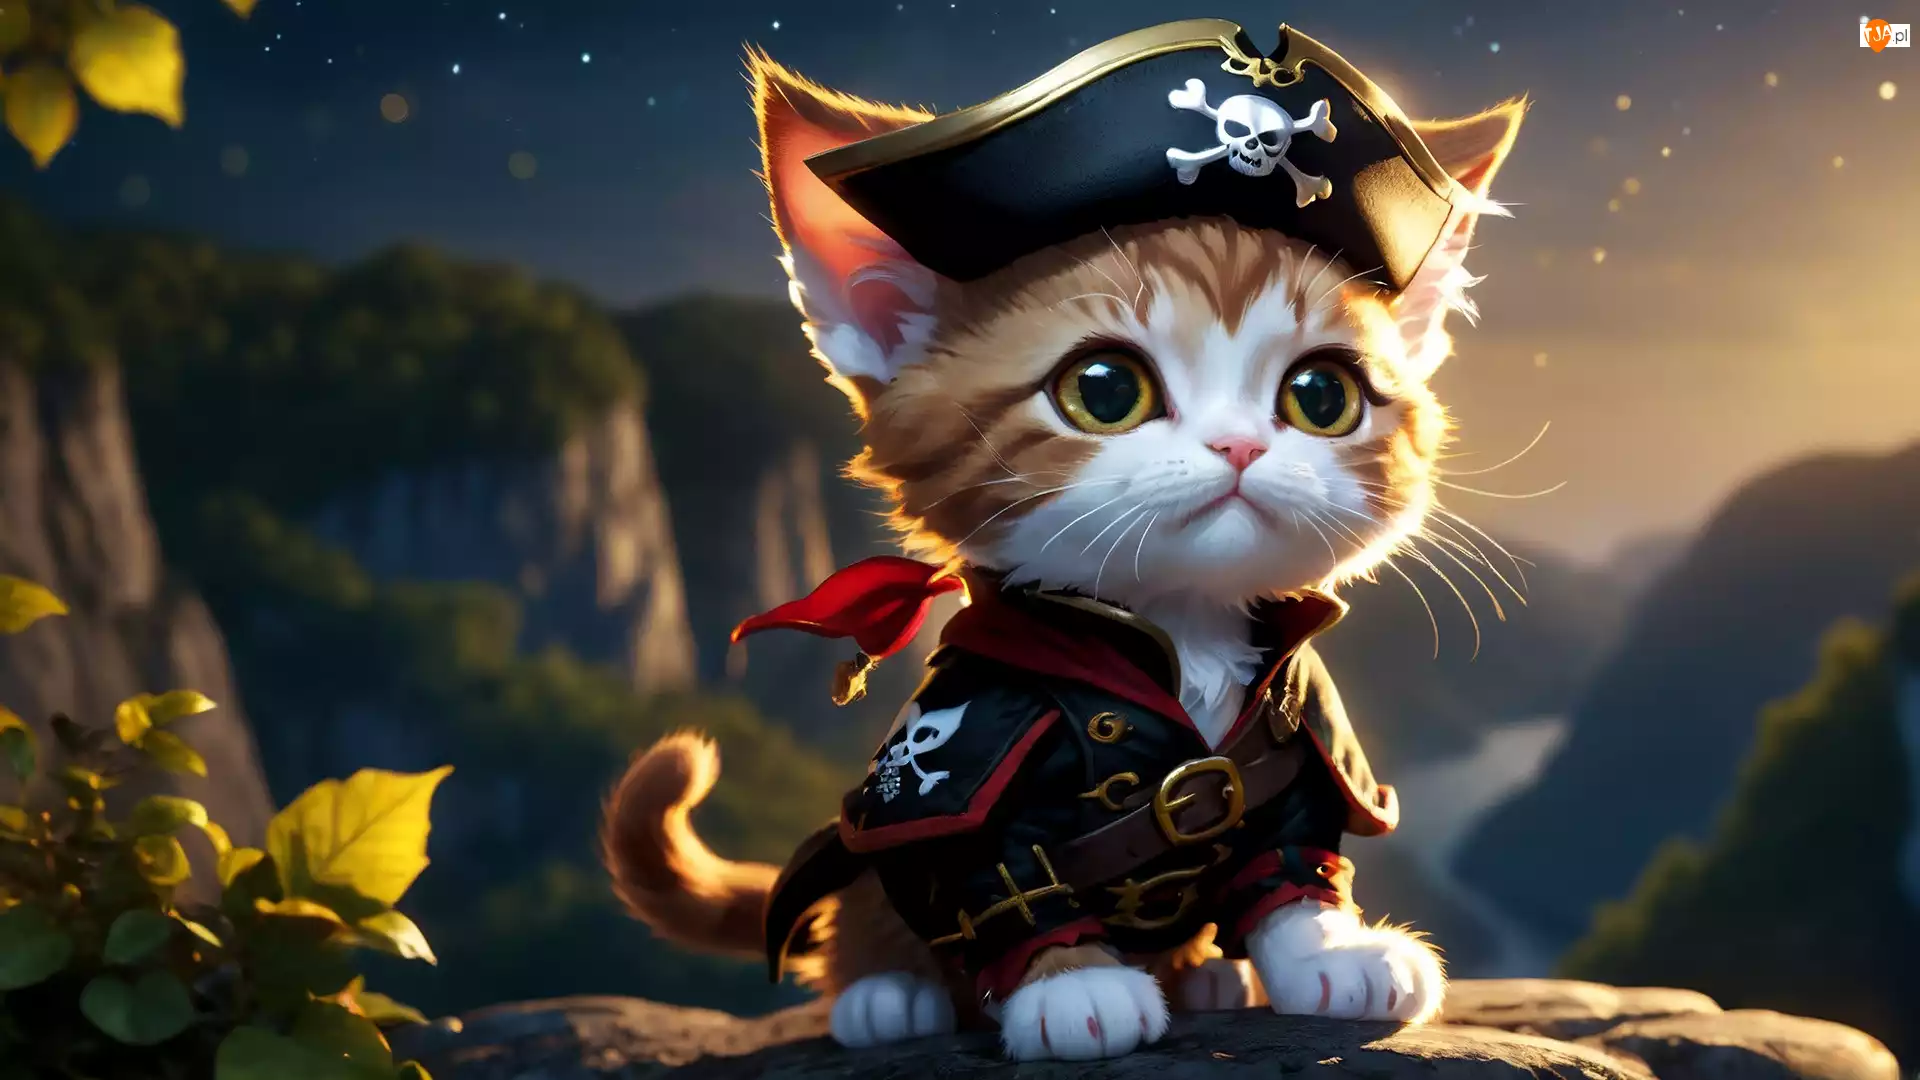 Grafika, Kot, Strój, Pirat